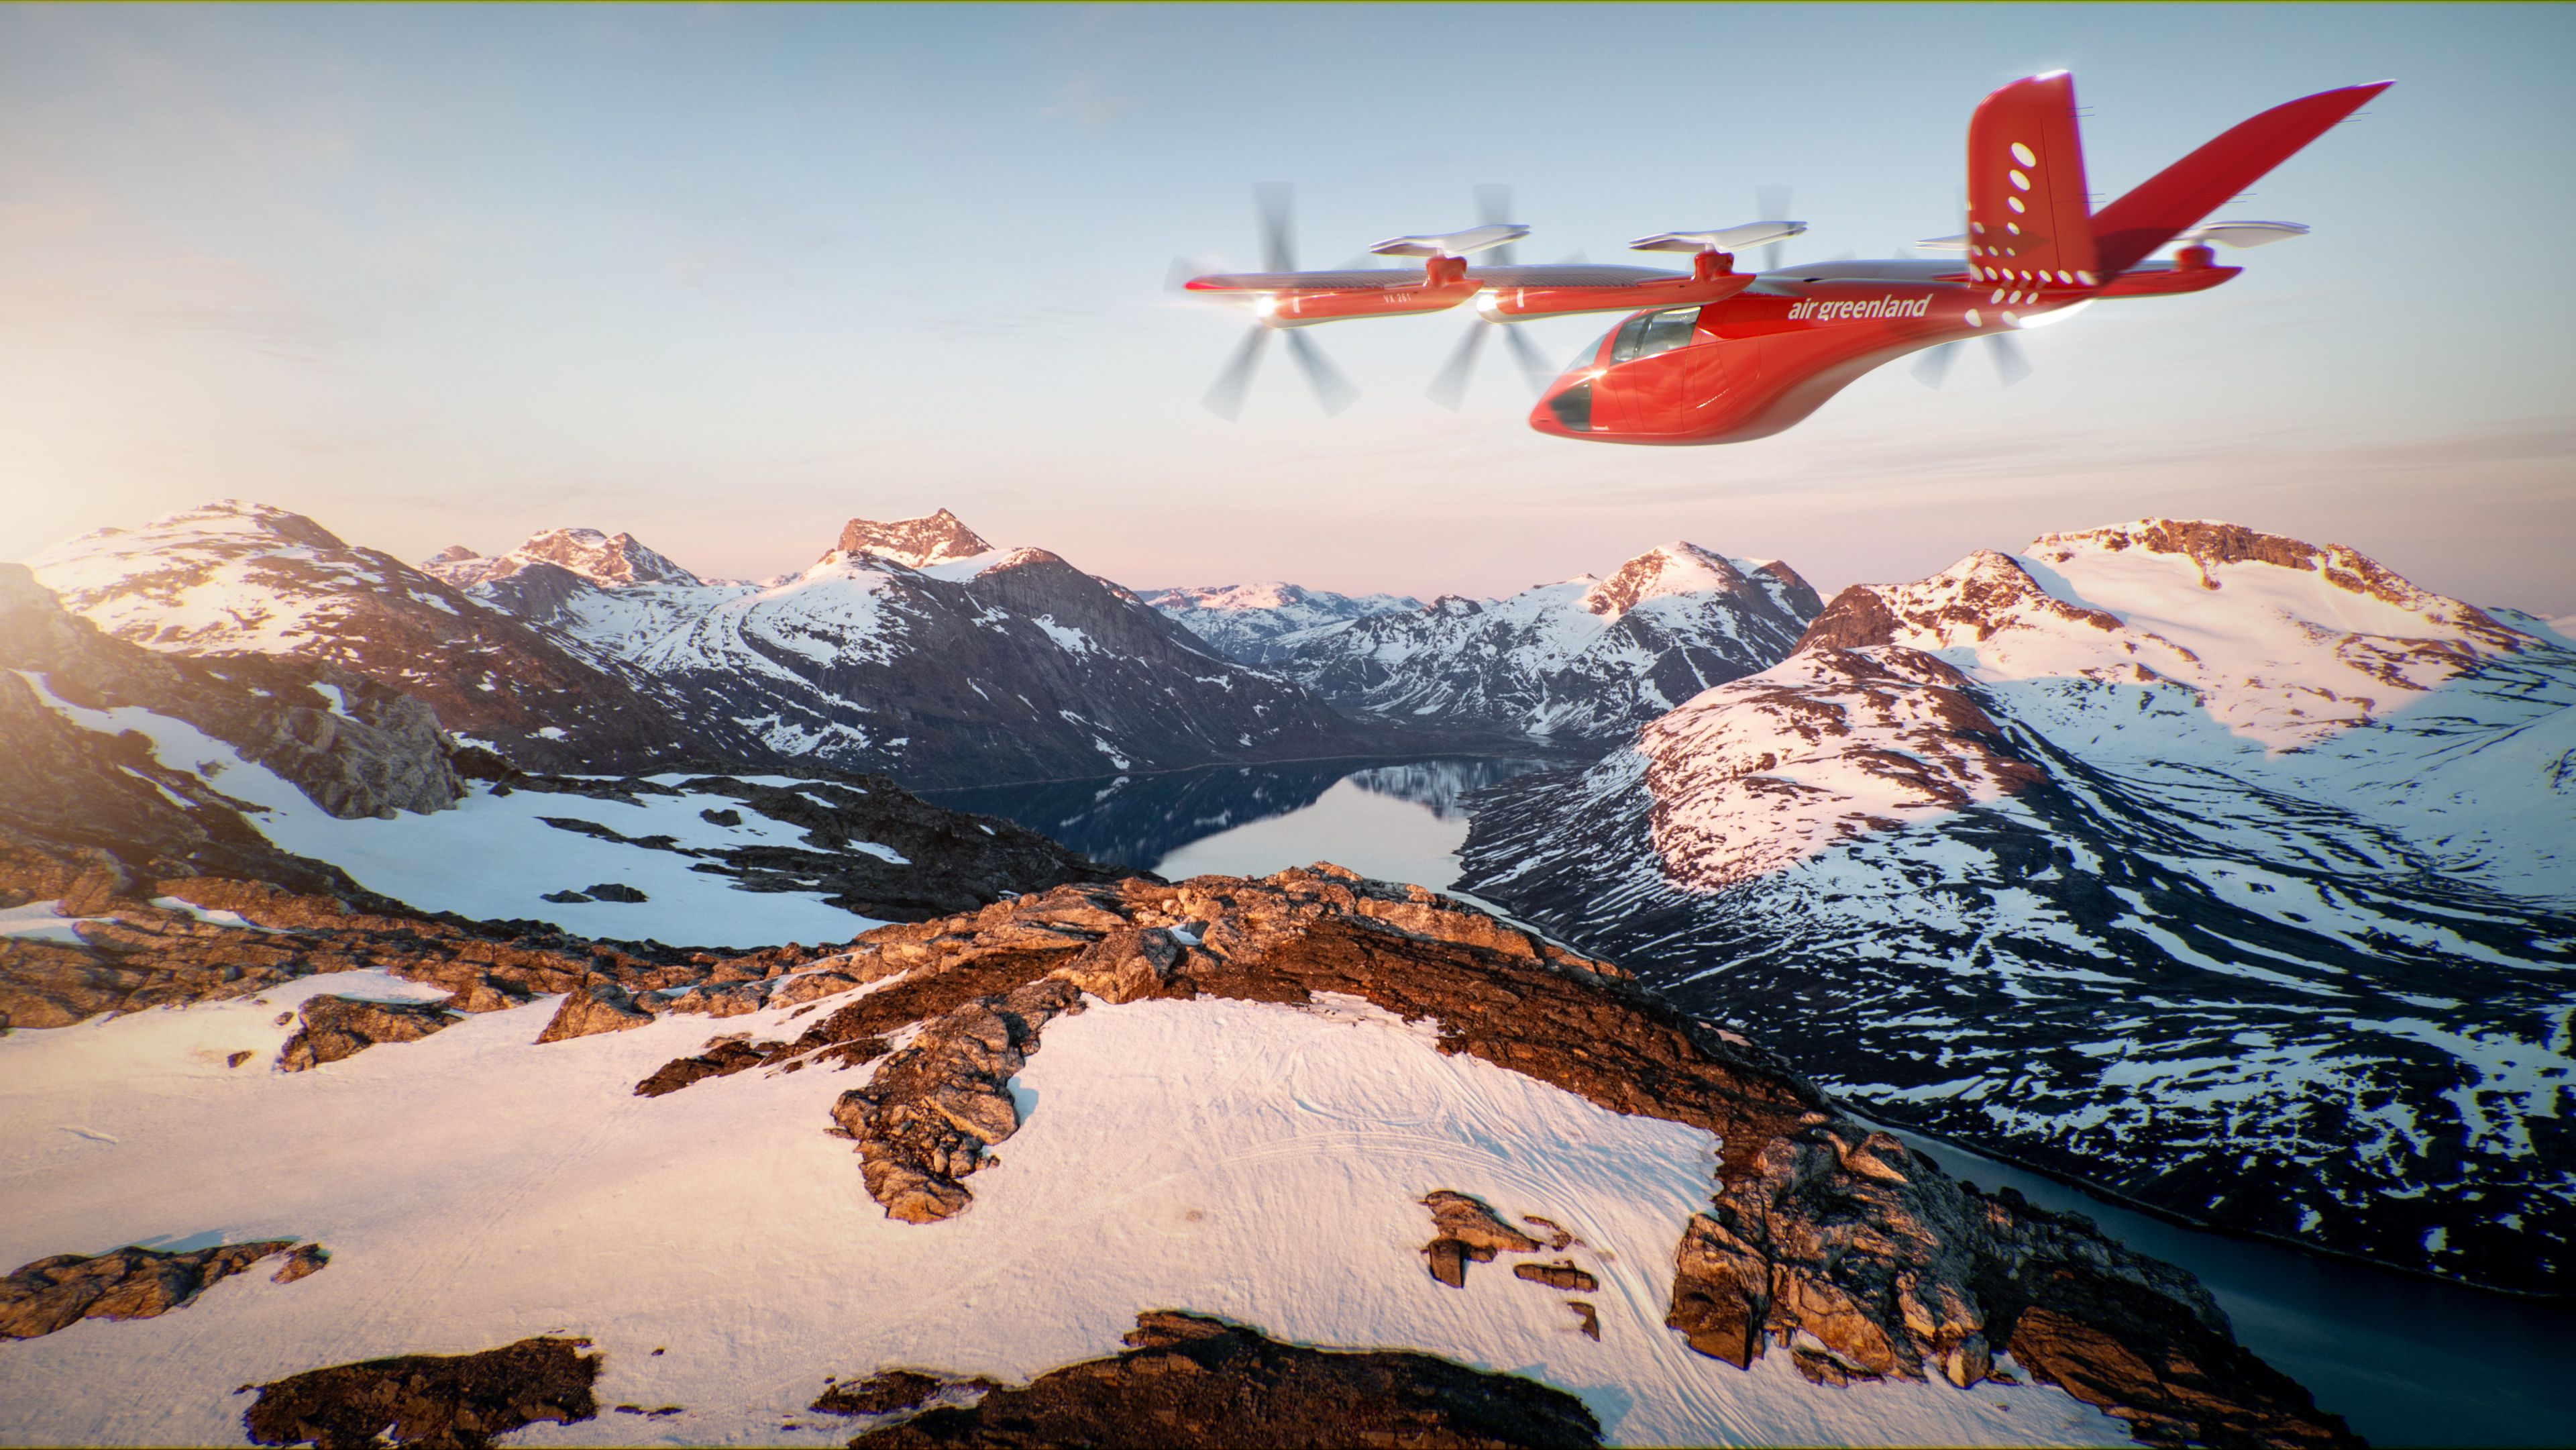 Vertical_Air Greenland - Social Media